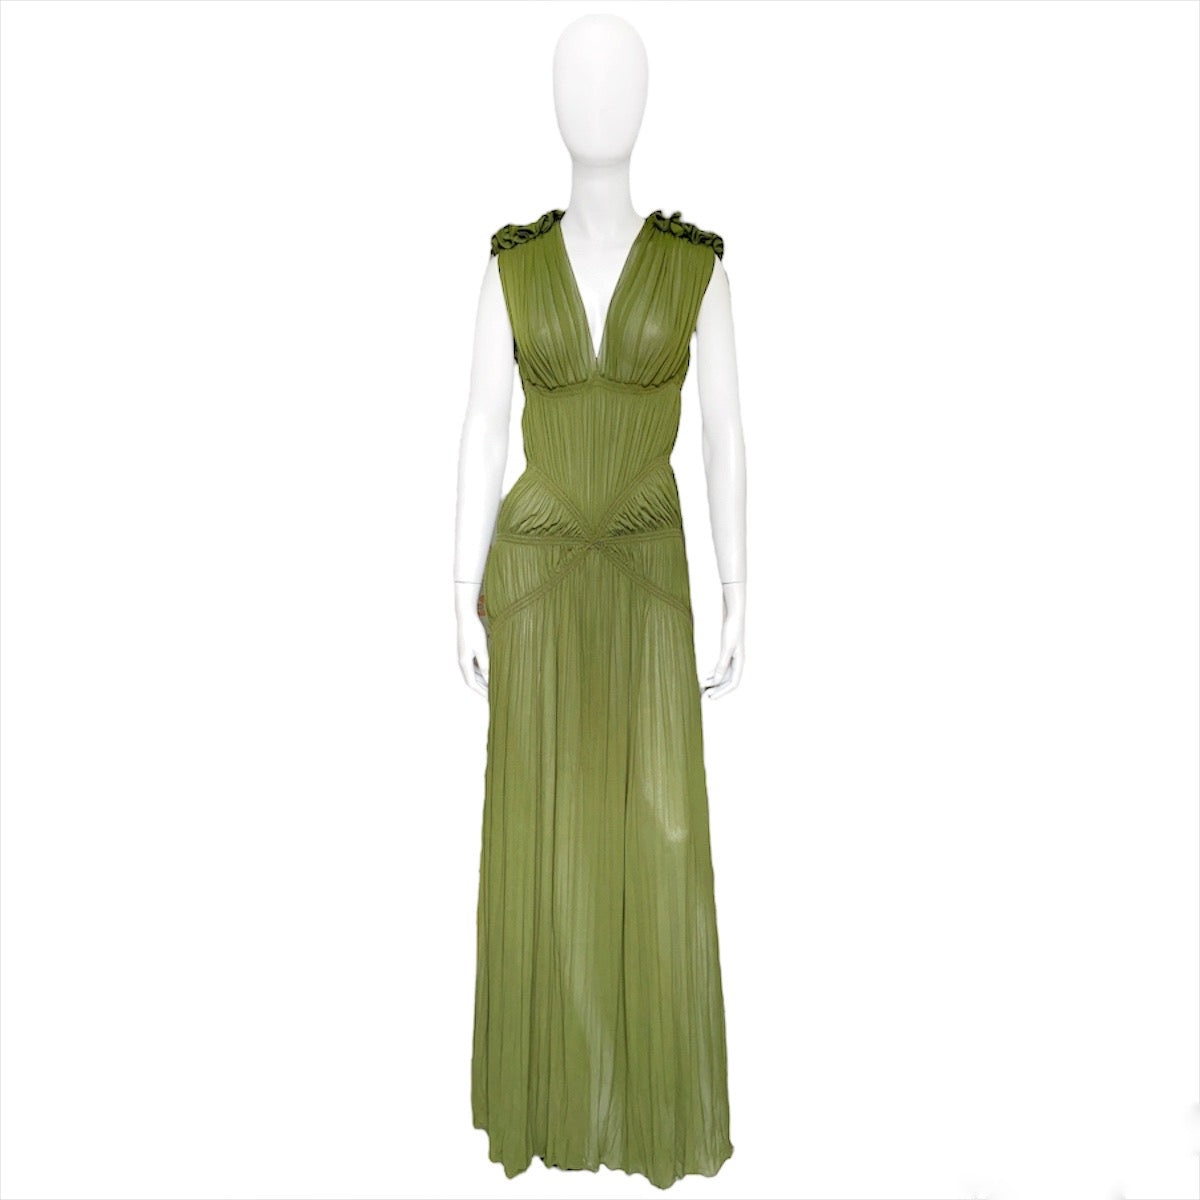 Jean Paul Gaultier spring 2011 green pleated ruffles maxi dress - 4